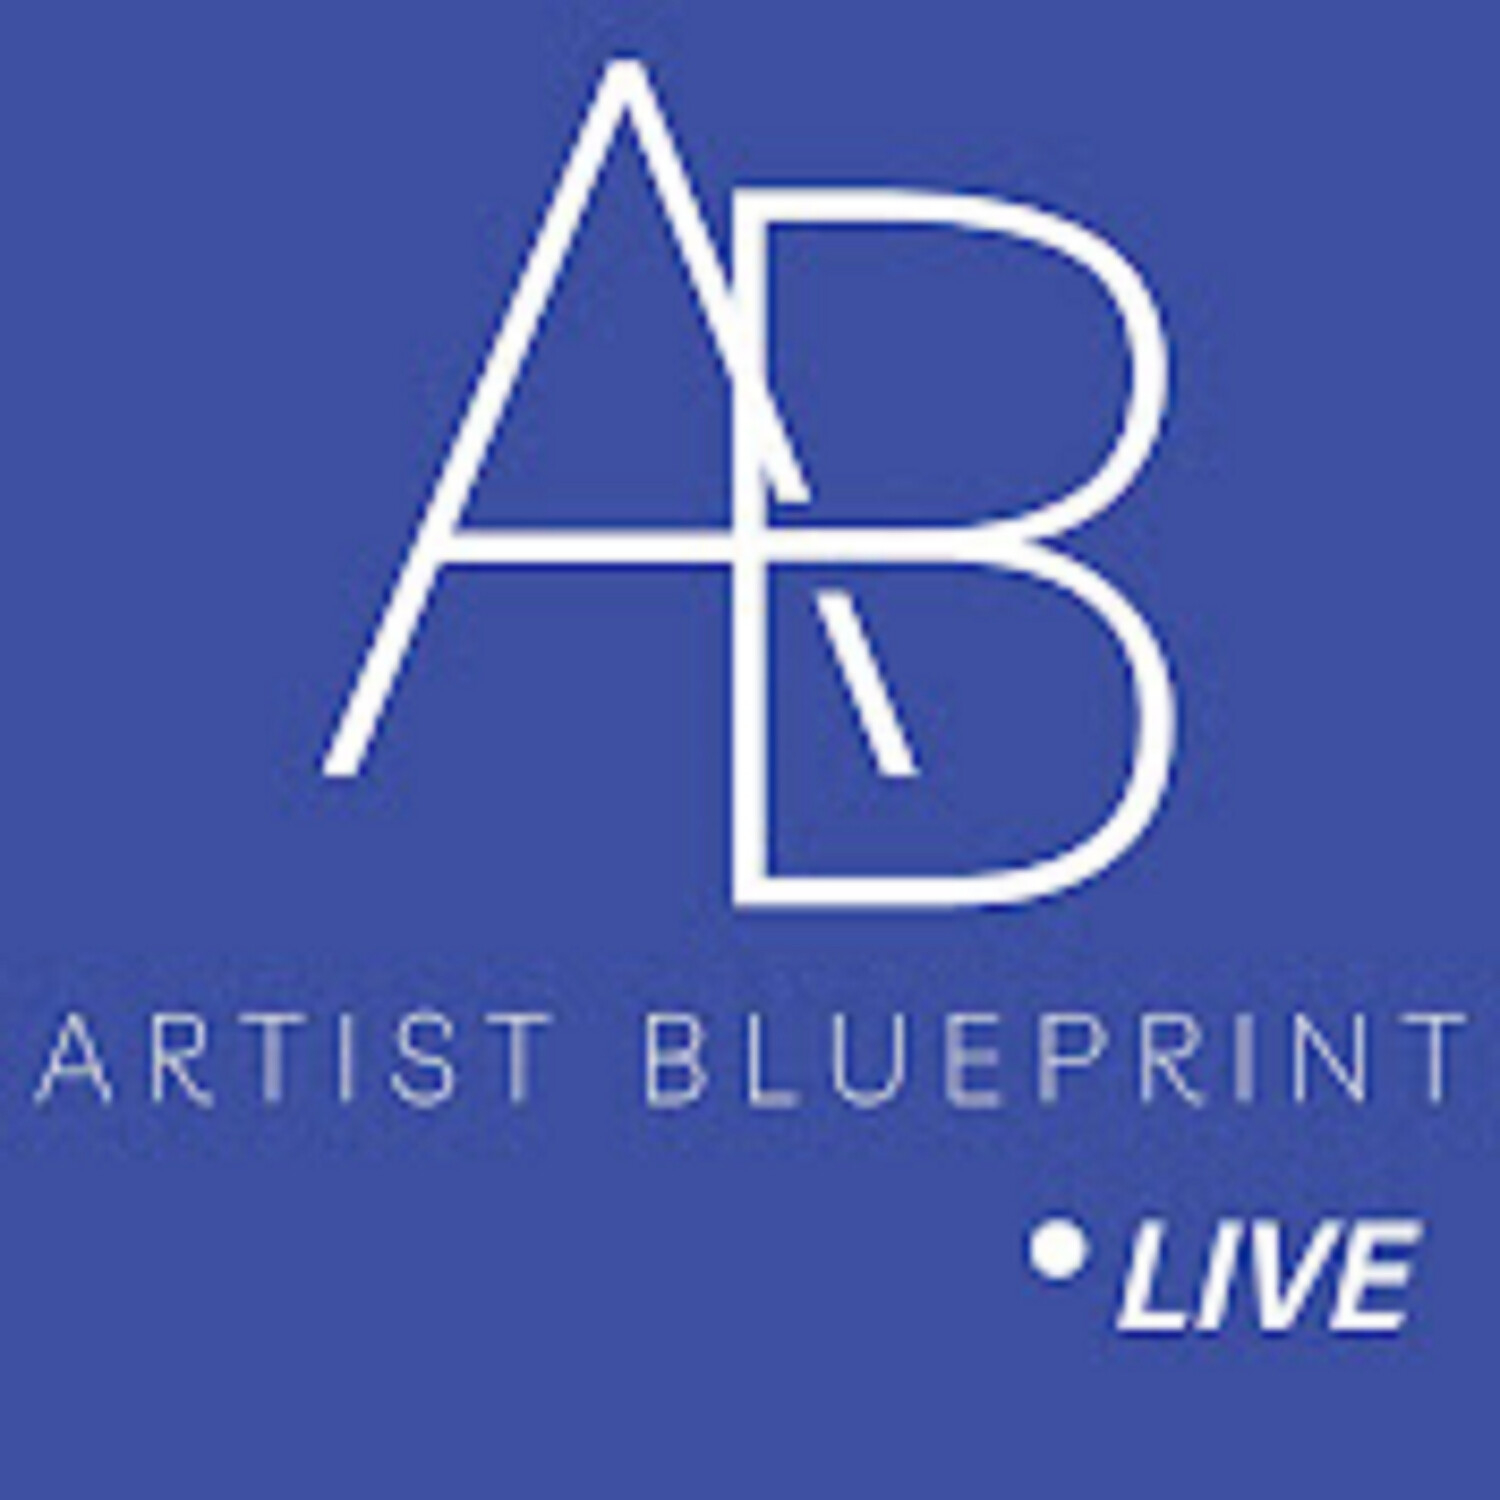 Artist Blueprint Live - Stevie Ray Vaughan & RUSH